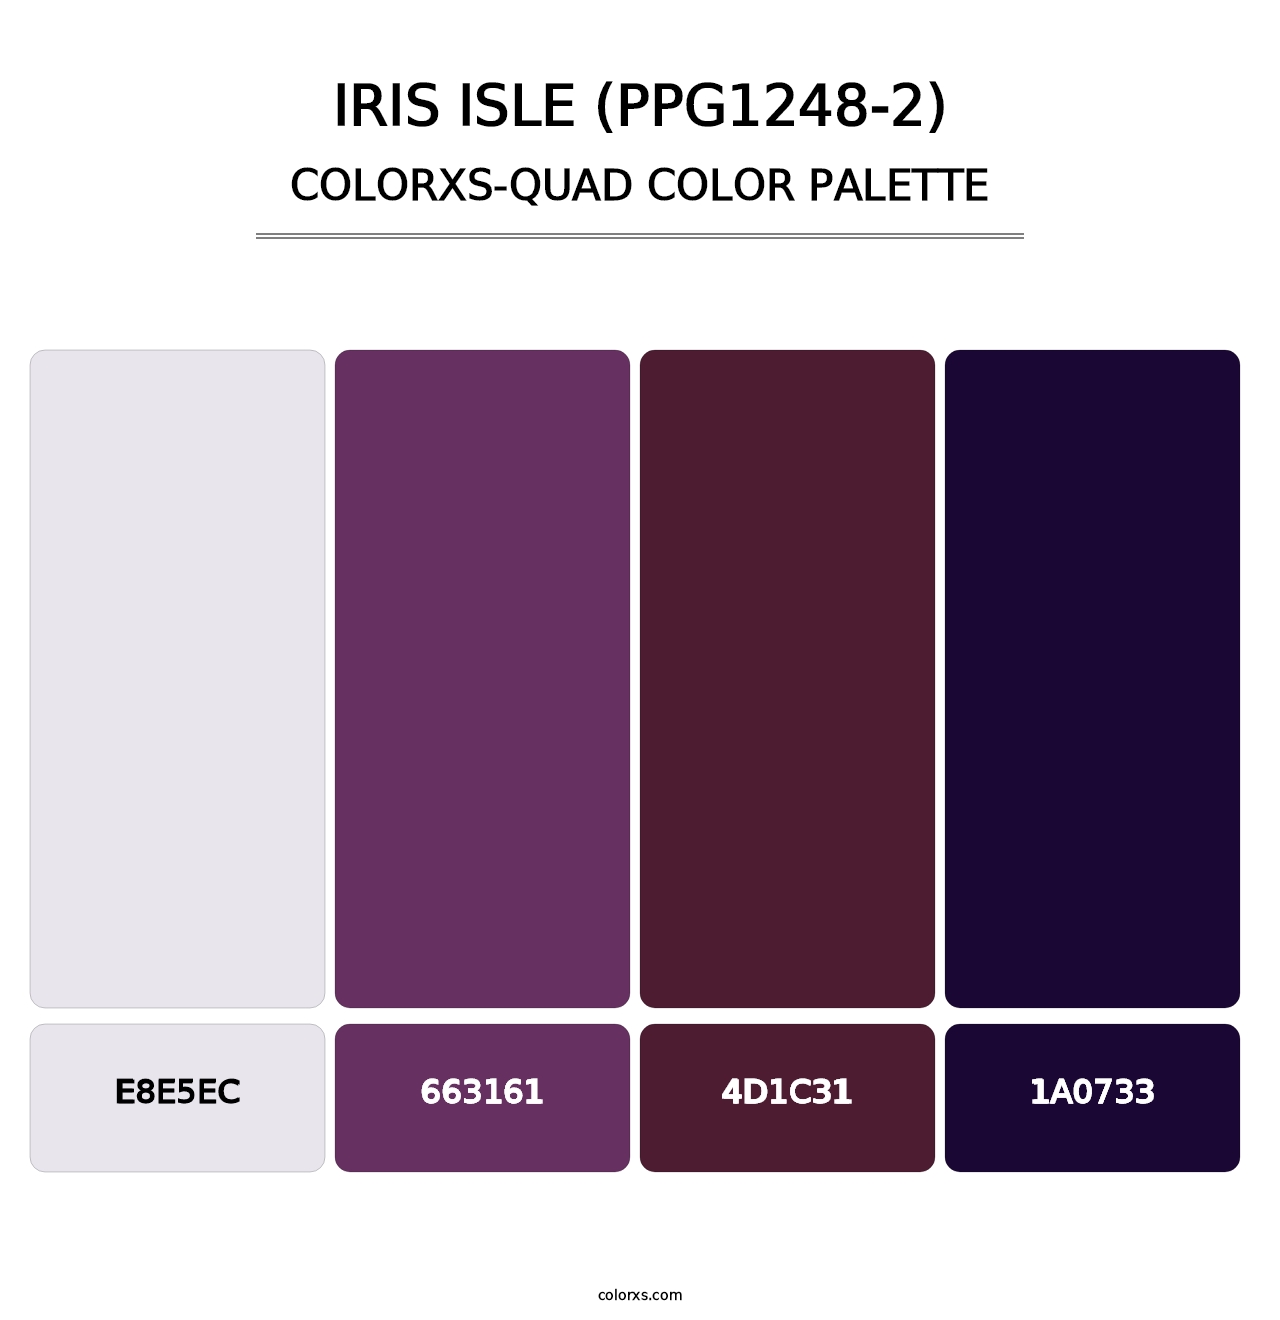 Iris Isle (PPG1248-2) - Colorxs Quad Palette